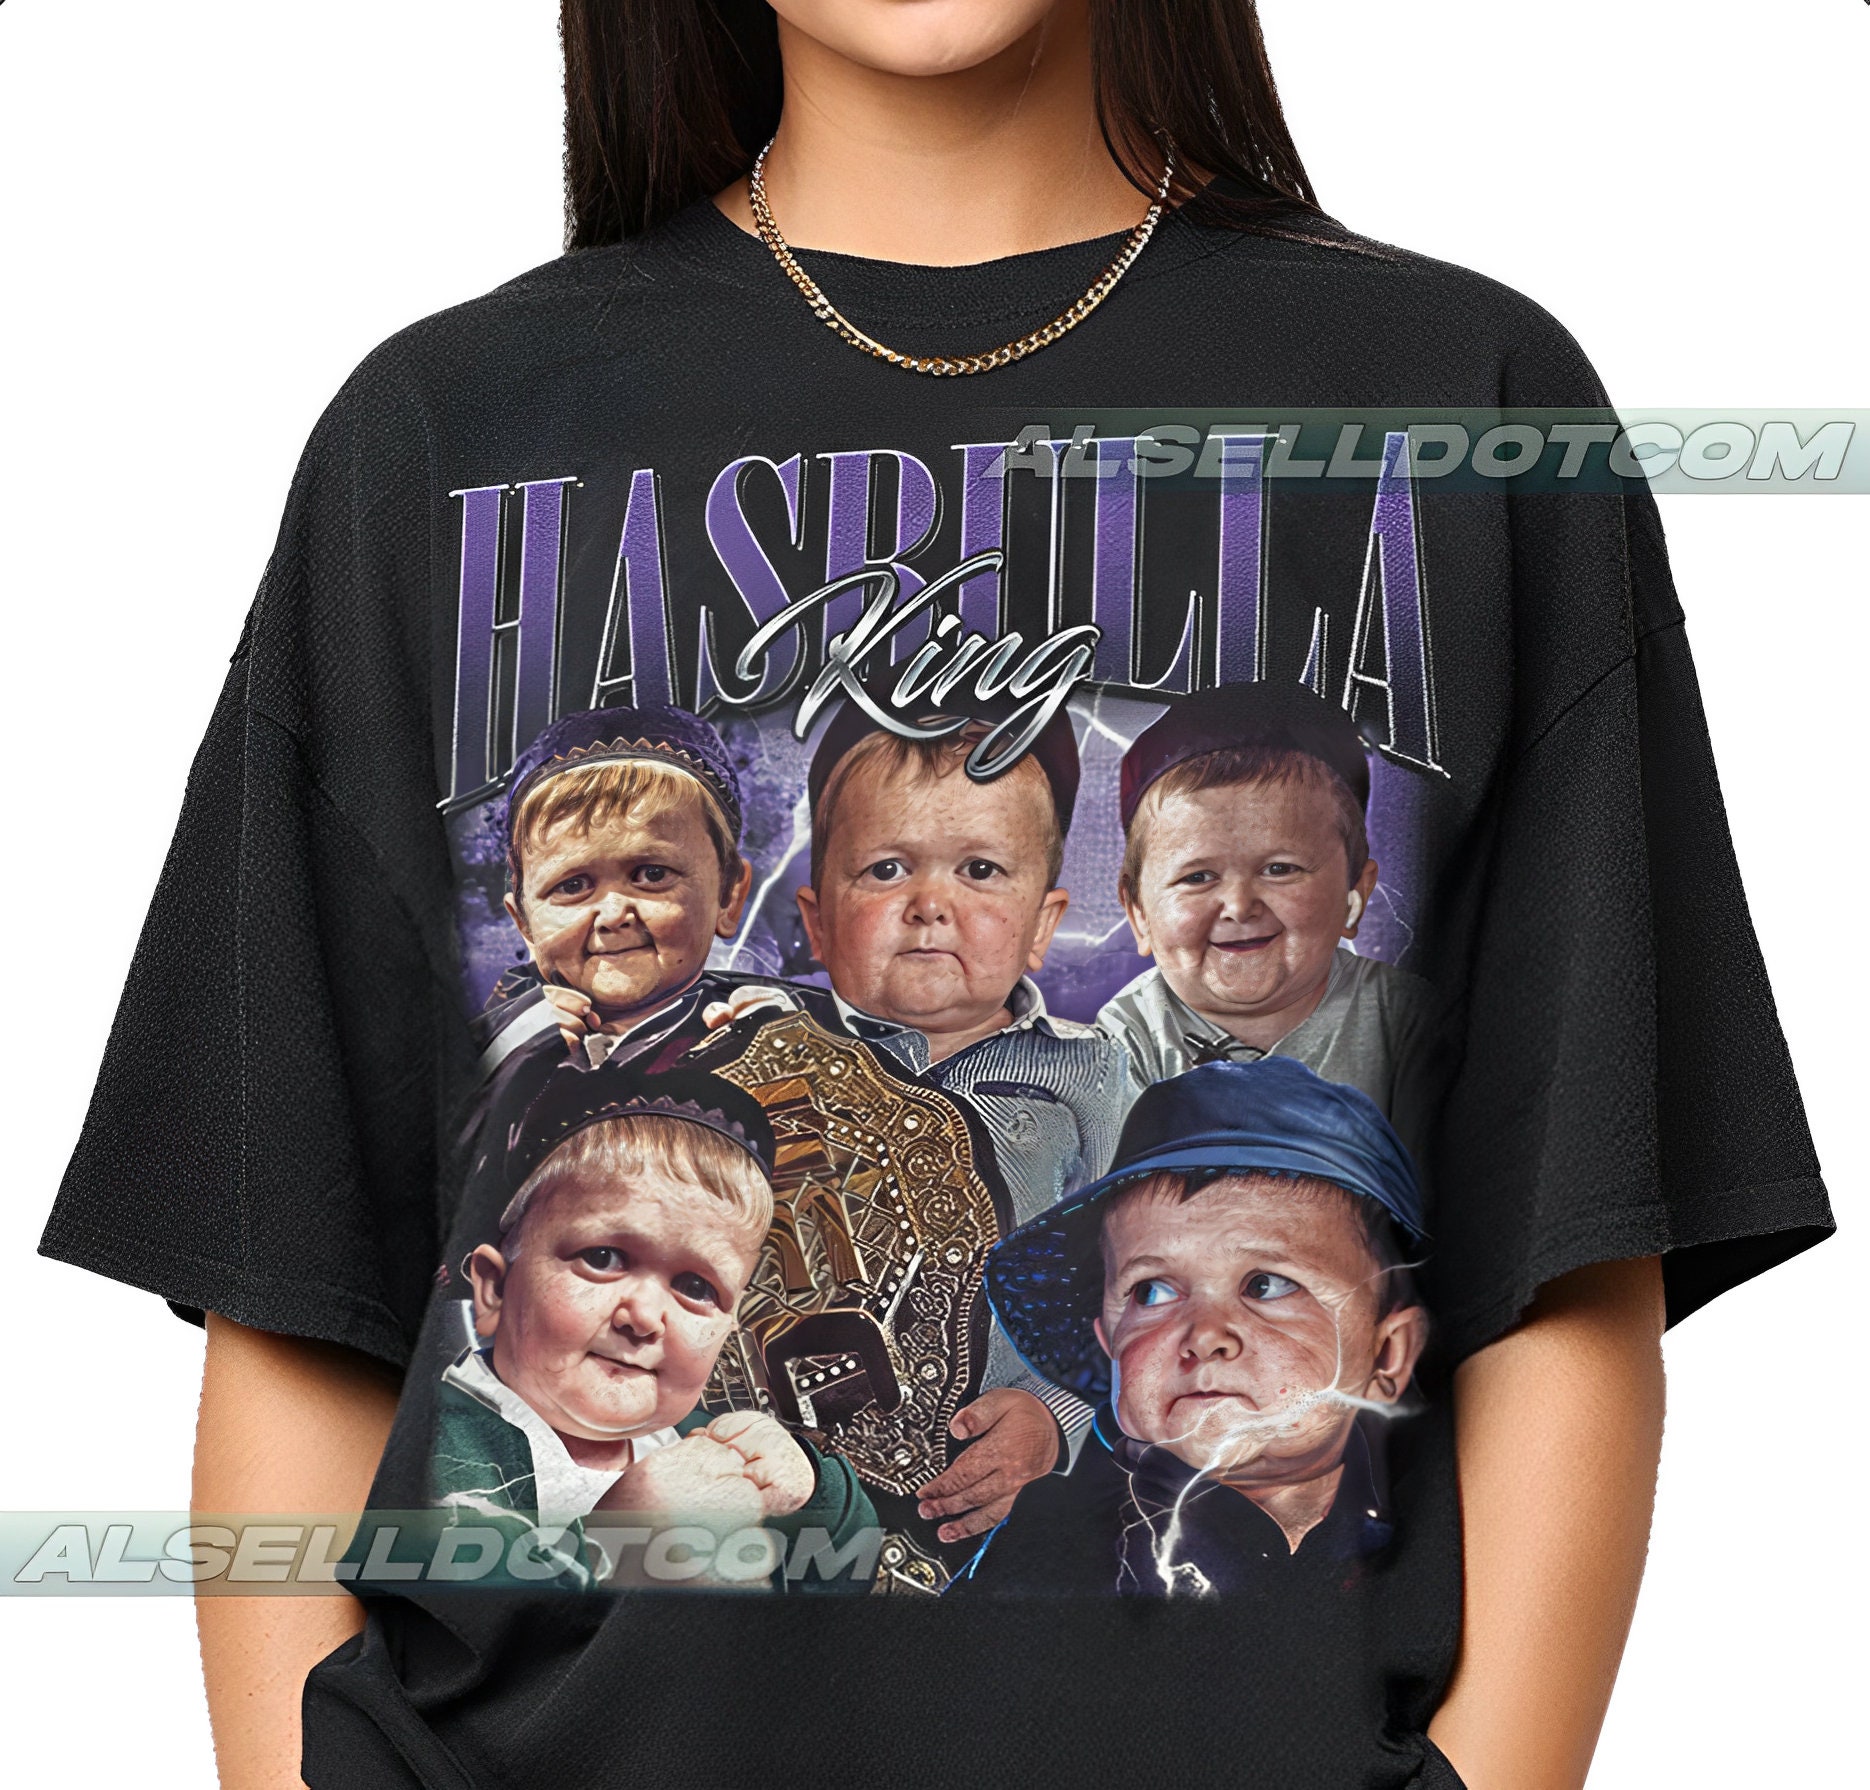 Limited King Hasbulla Vintage T-Shirt - Gift For Women and Man - Unisex T-Shirt, Trending T-Shirt, Unisex Shirt, 90s Bootleg Graphic T-Shirt